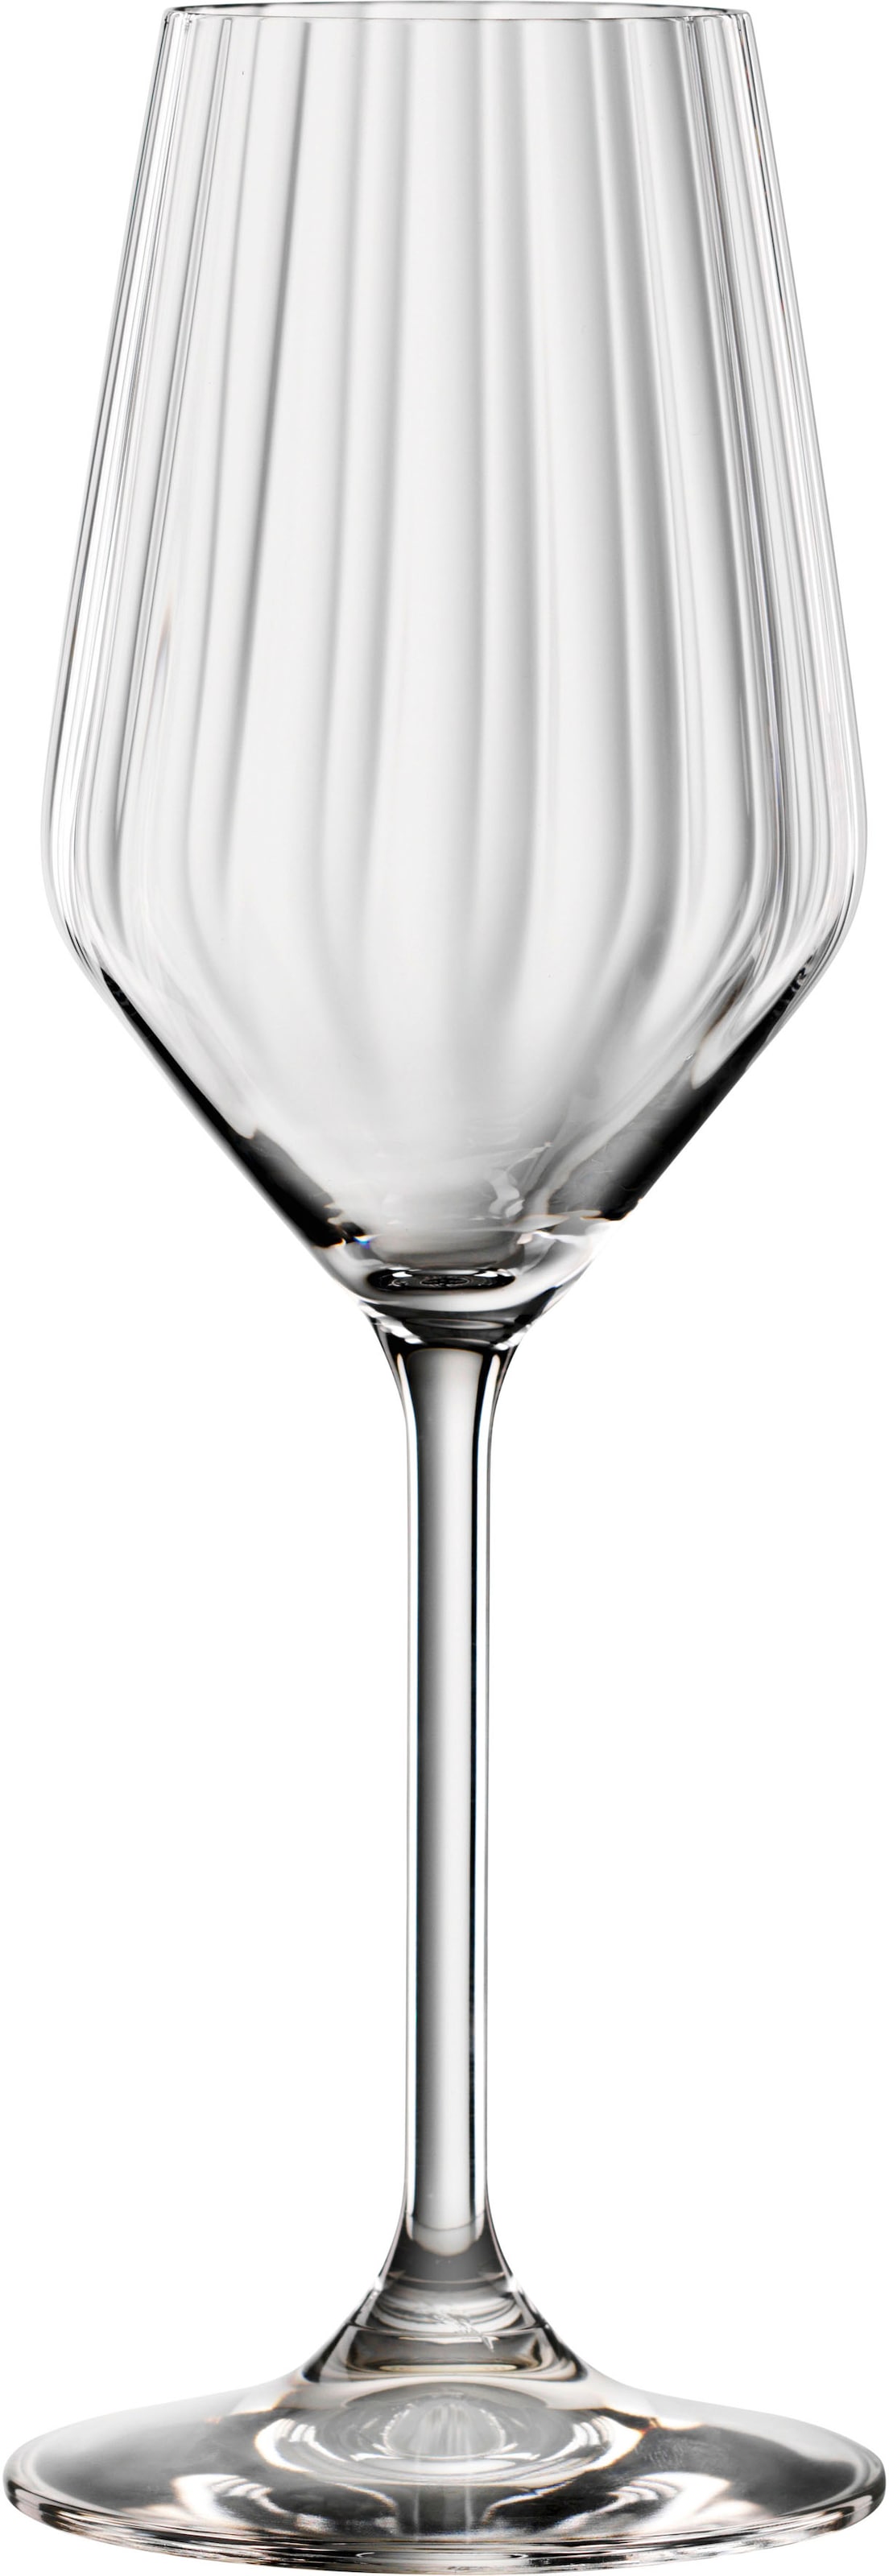 Champagnerglas »LifeStyle«, (Set, 4 tlg., Set bestehend aus 4 Gläsern), 310 ml, 4-teilig